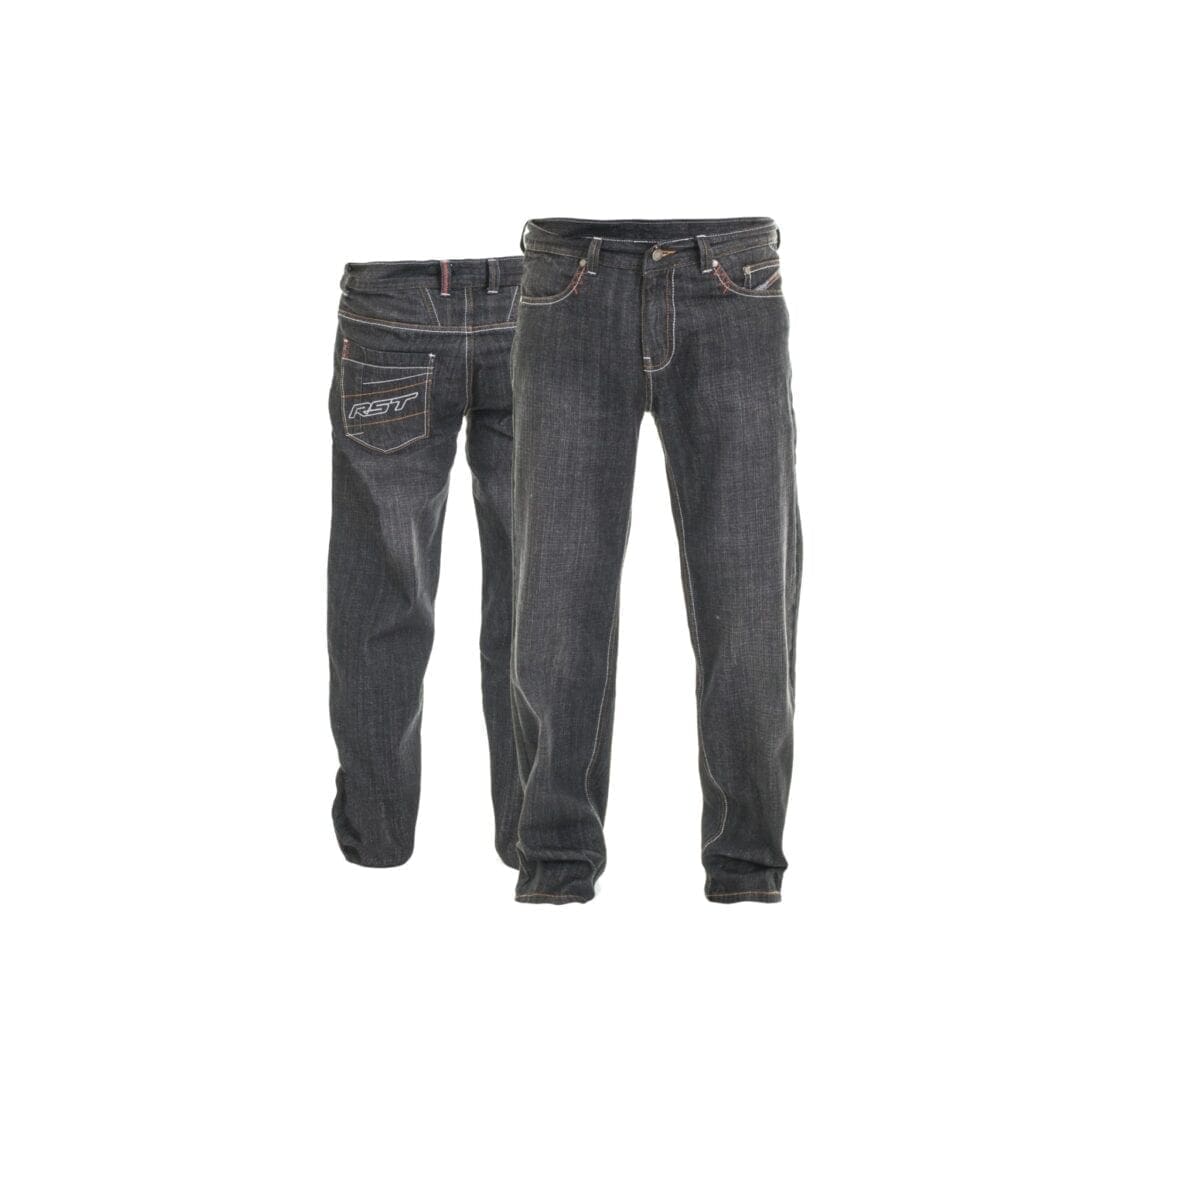 Review: RST Aramid Wax II 2205 Jeans